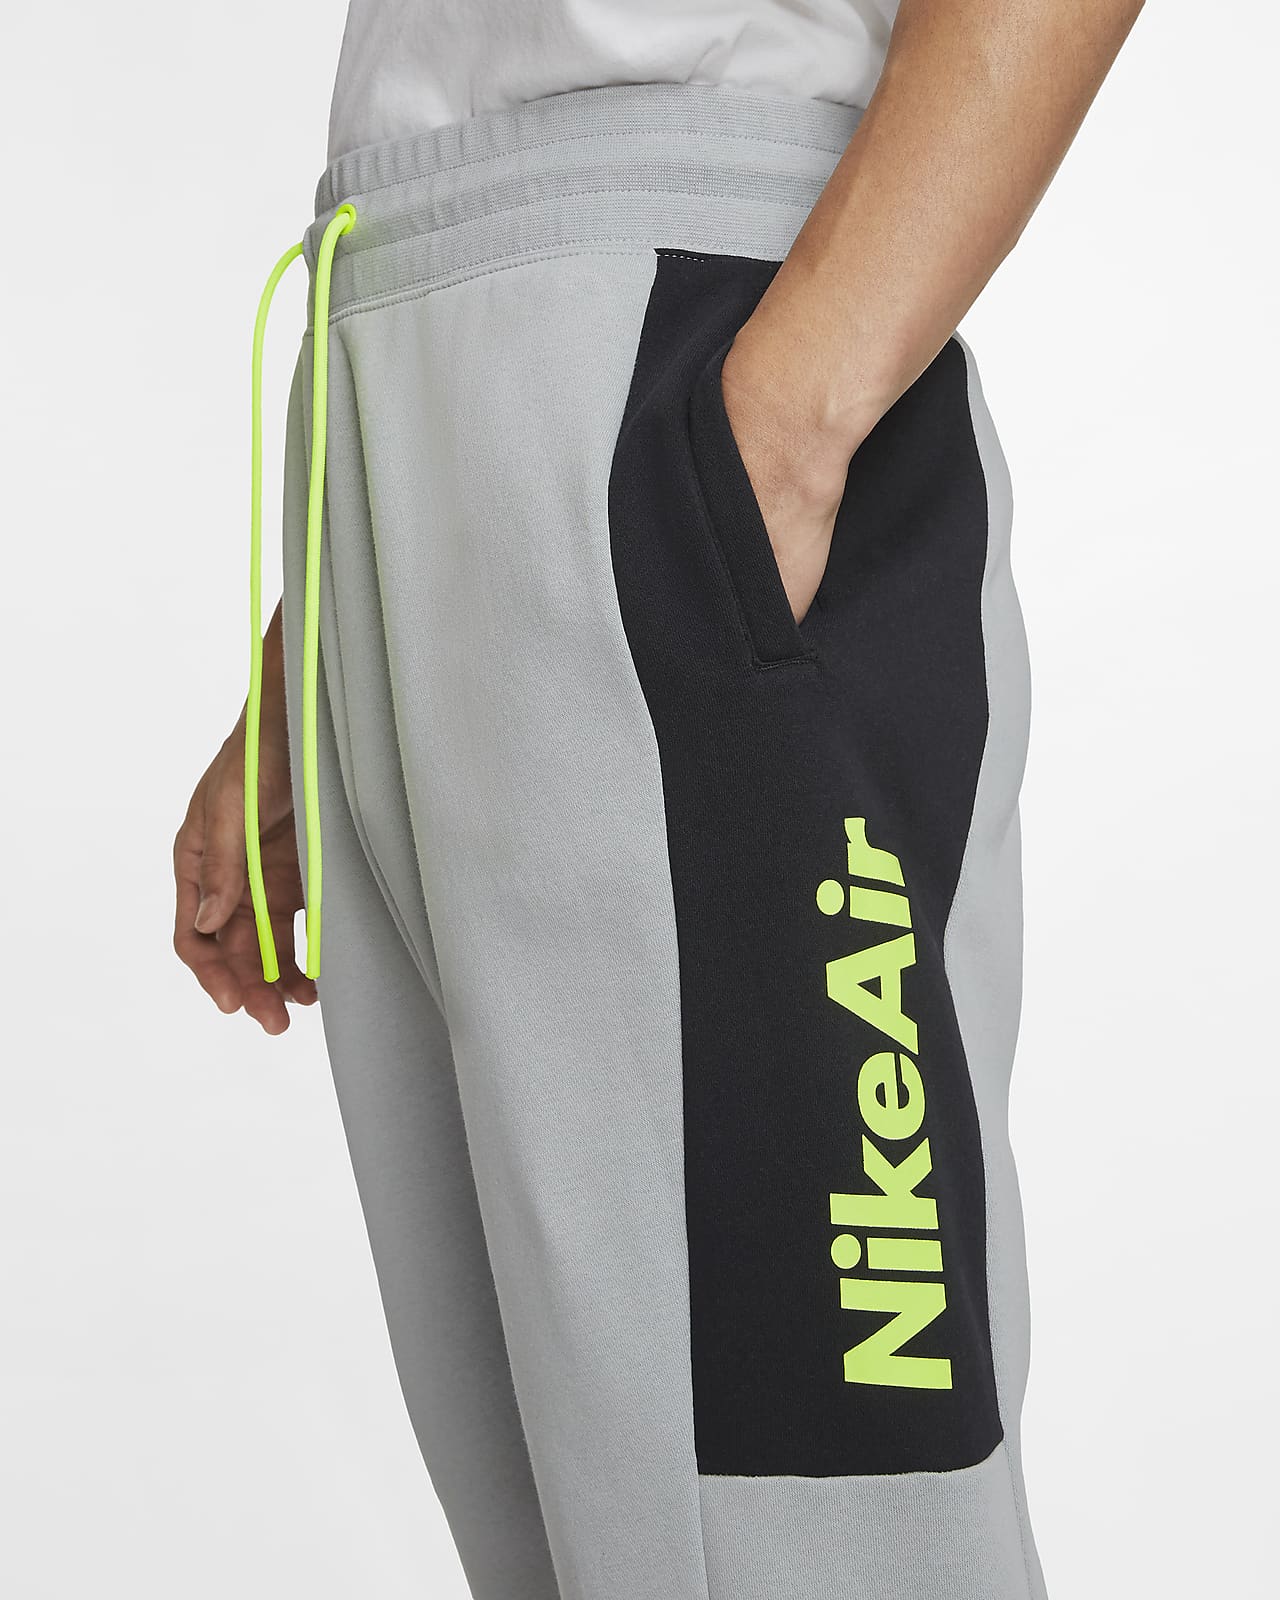 Nike Air Men's Fleece Trousers. Nike ID